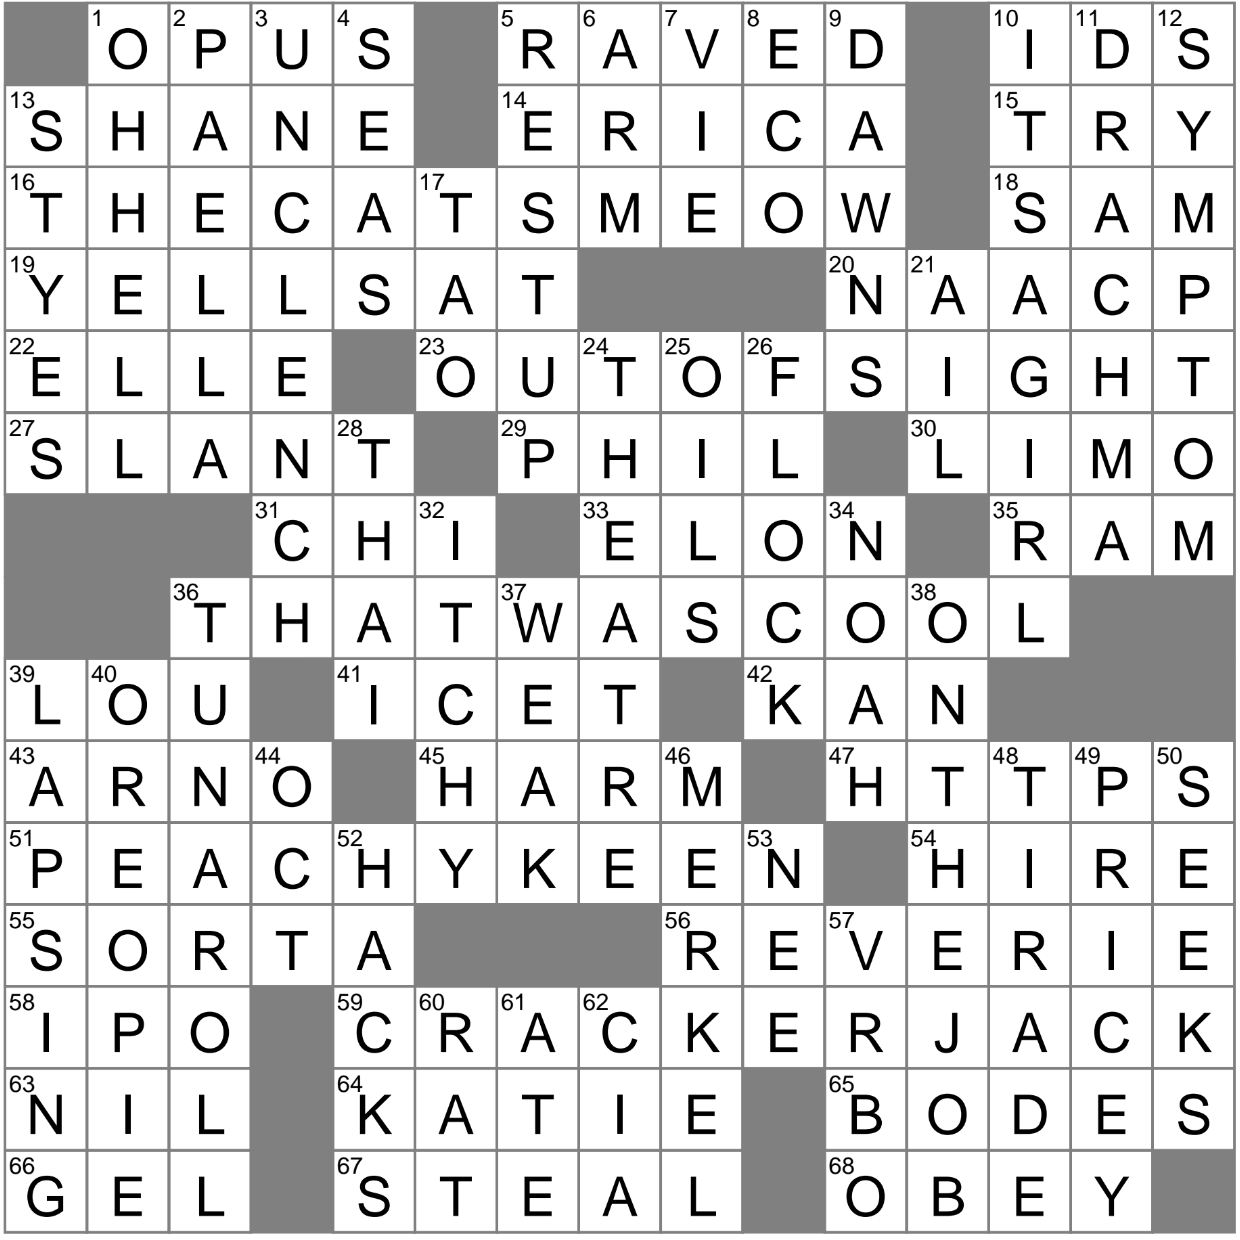 LA Times Crossword 17 May 23 Wednesday LAXCrossword com